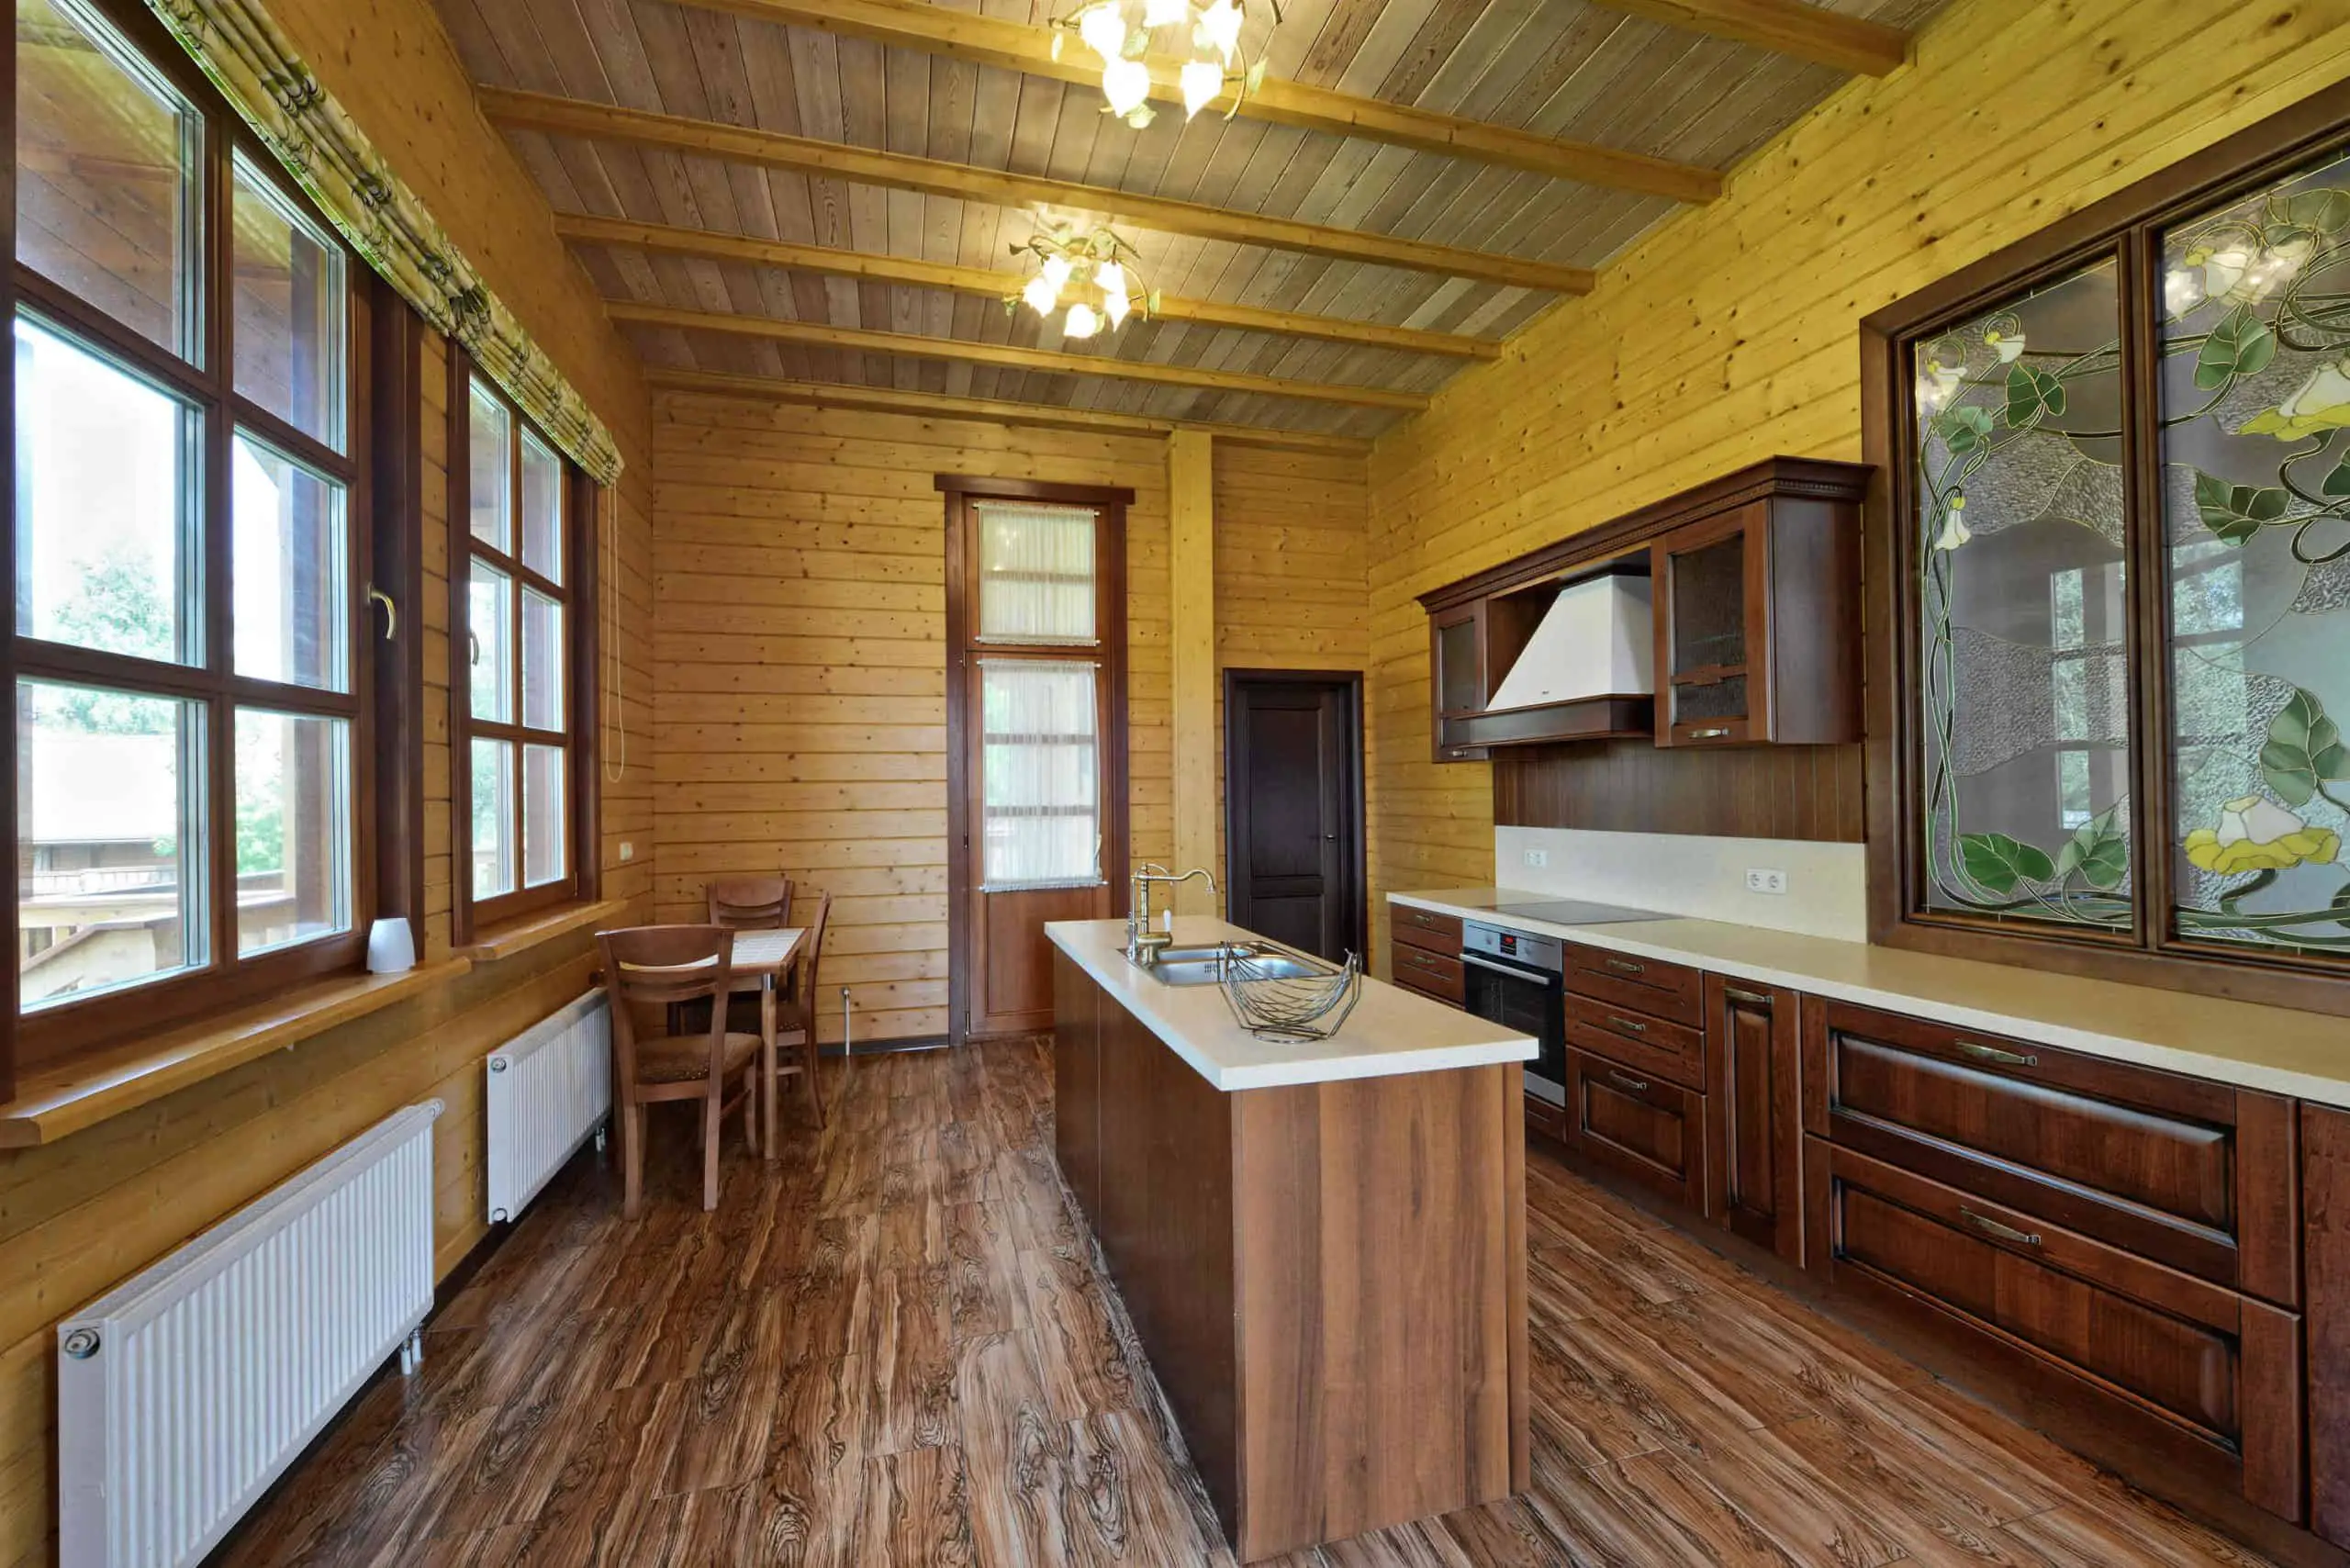 Combination Wood cabin kitchen ideas